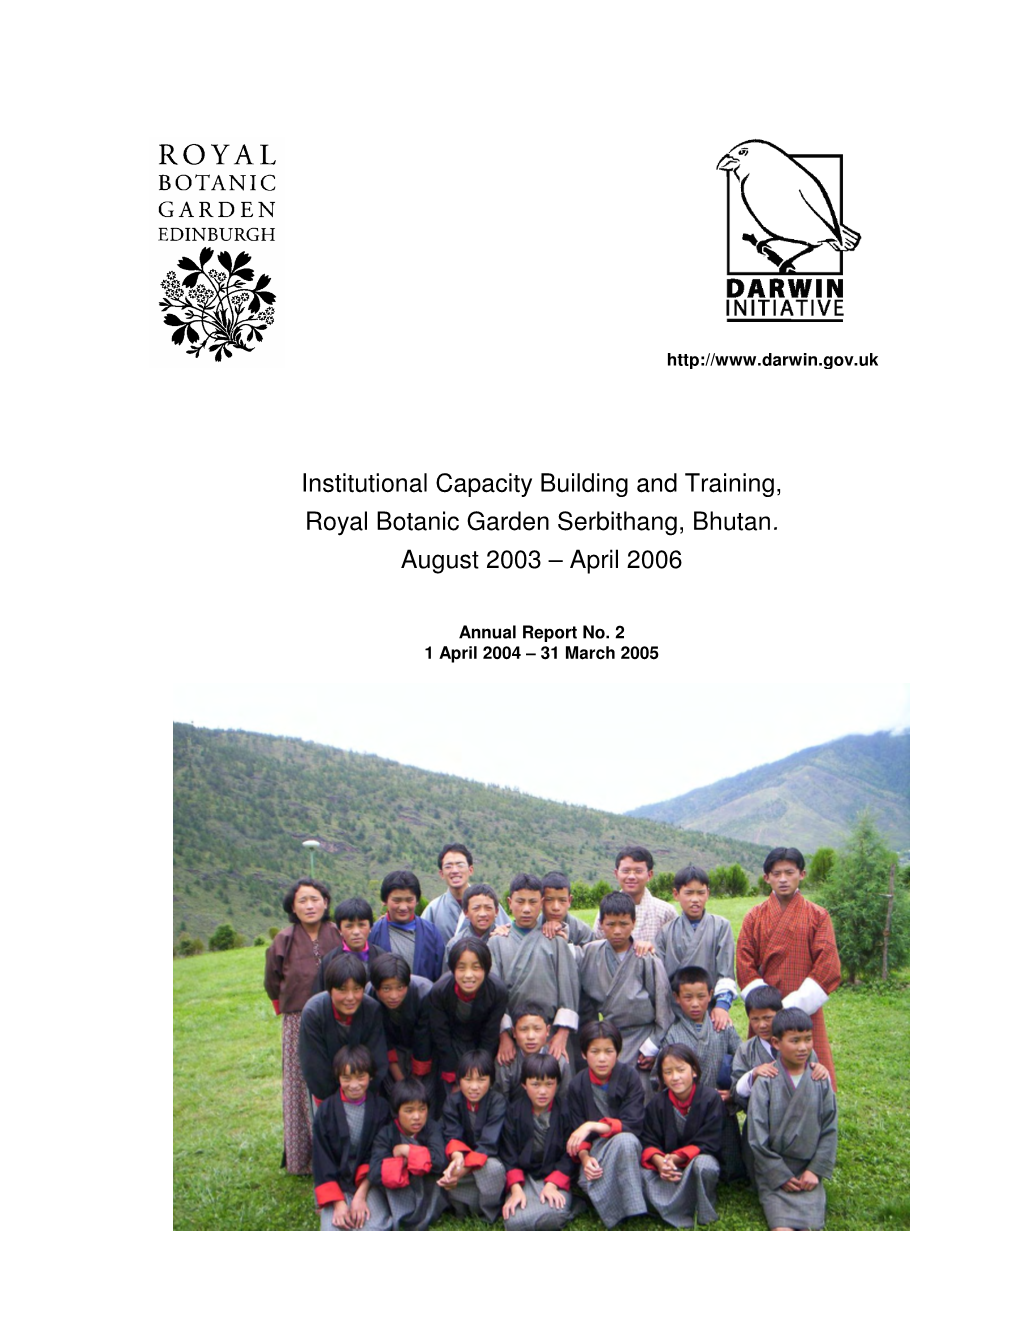 Institutional Capacity Building and Training, Royal Botanic Garden Serbithang, Bhutan